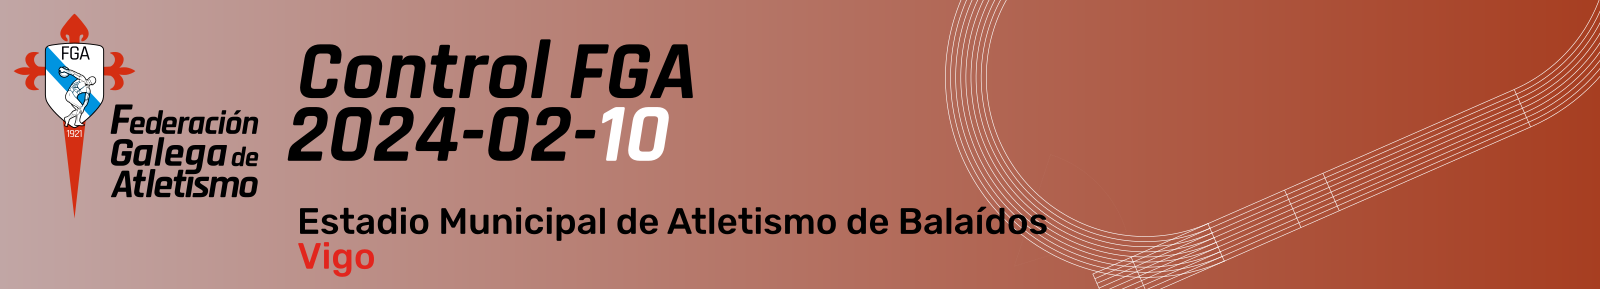  Control FGA AL 2024-02-10.  Estadio Municipal de Atletismo de Balaídos, 10 febreiro 2024